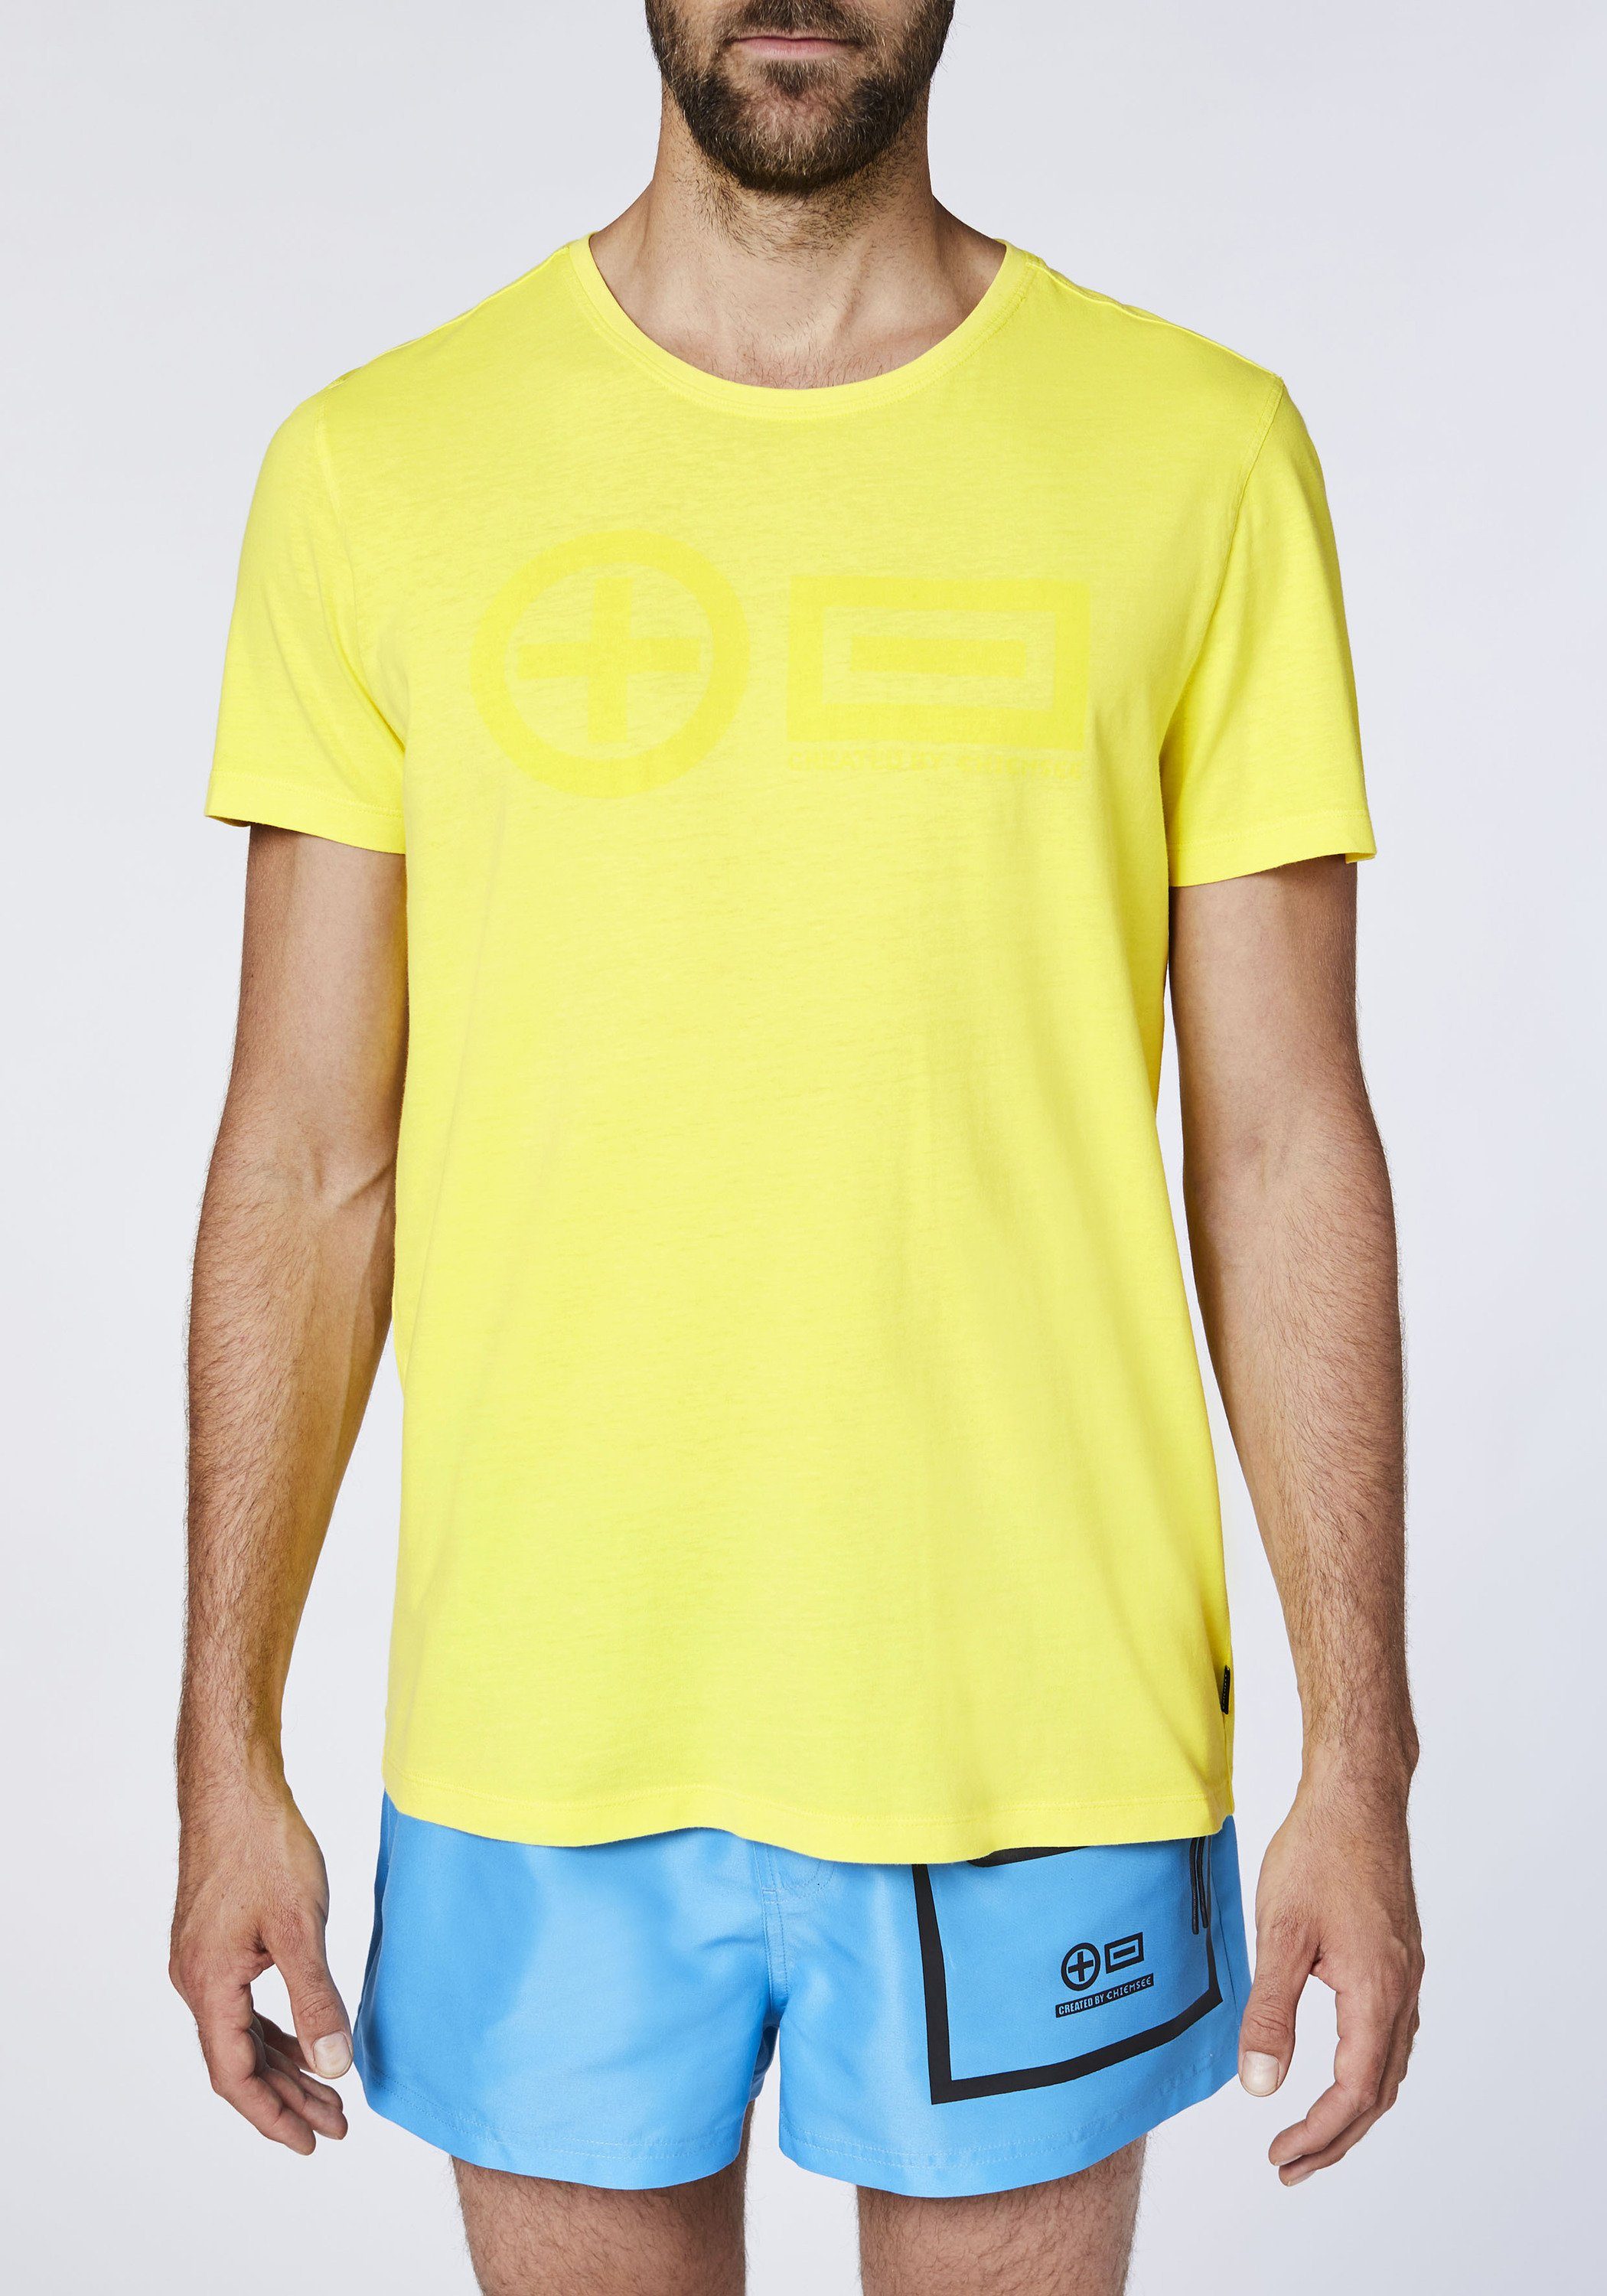 Print-Shirt 1 Chiemsee mit T-Shirt Frontprint PlusMinus Lemon Tonic